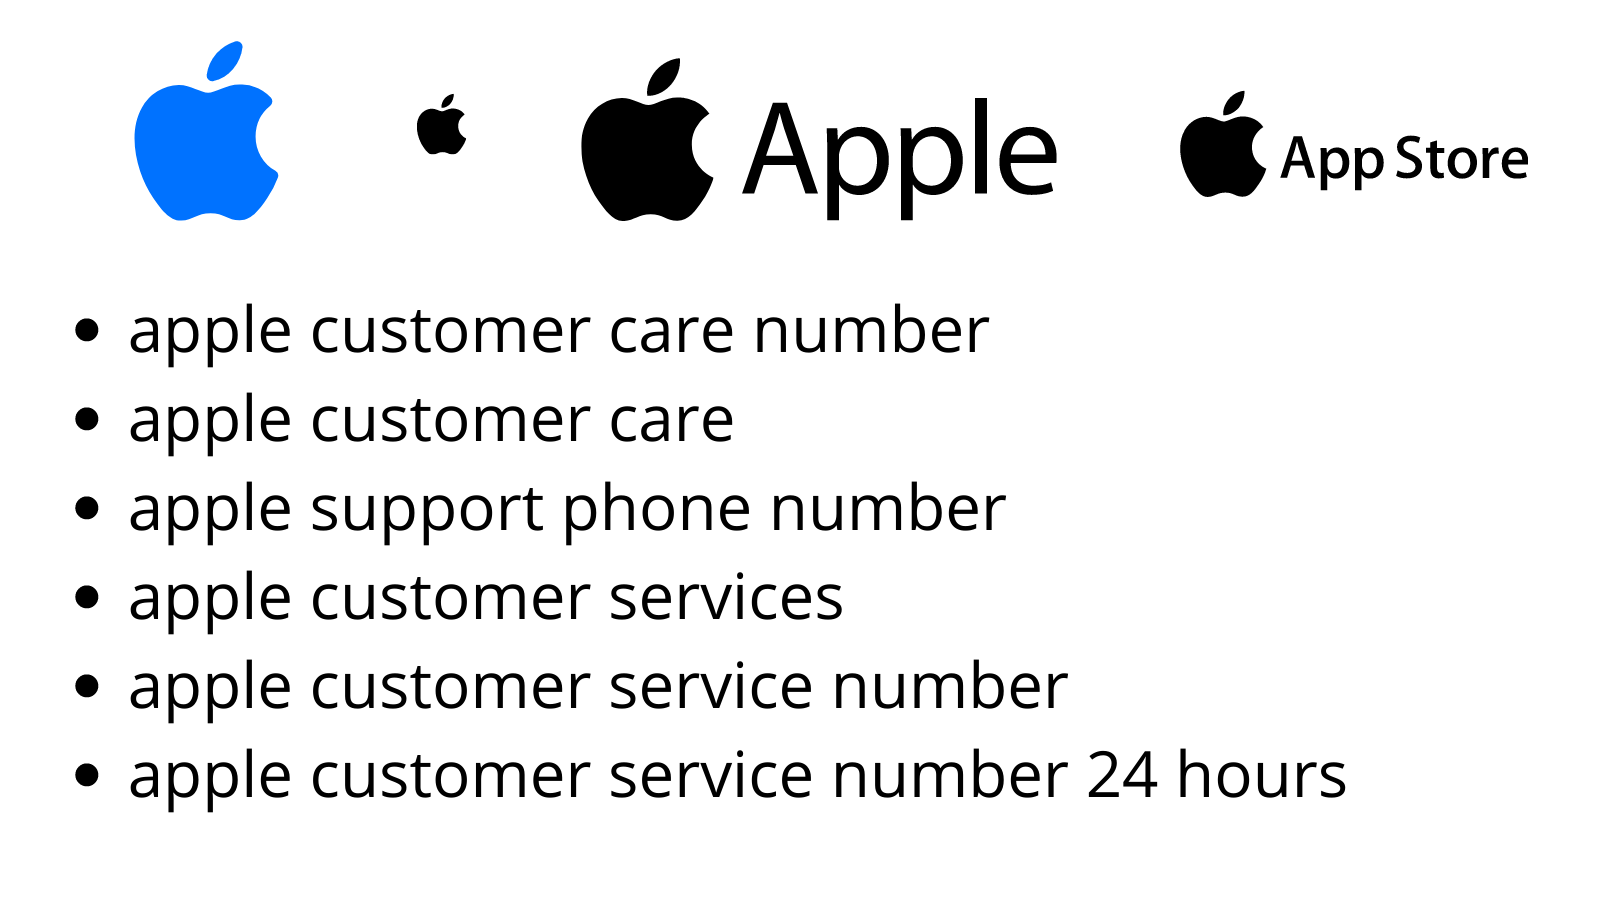 Apple customer service number 24 hours